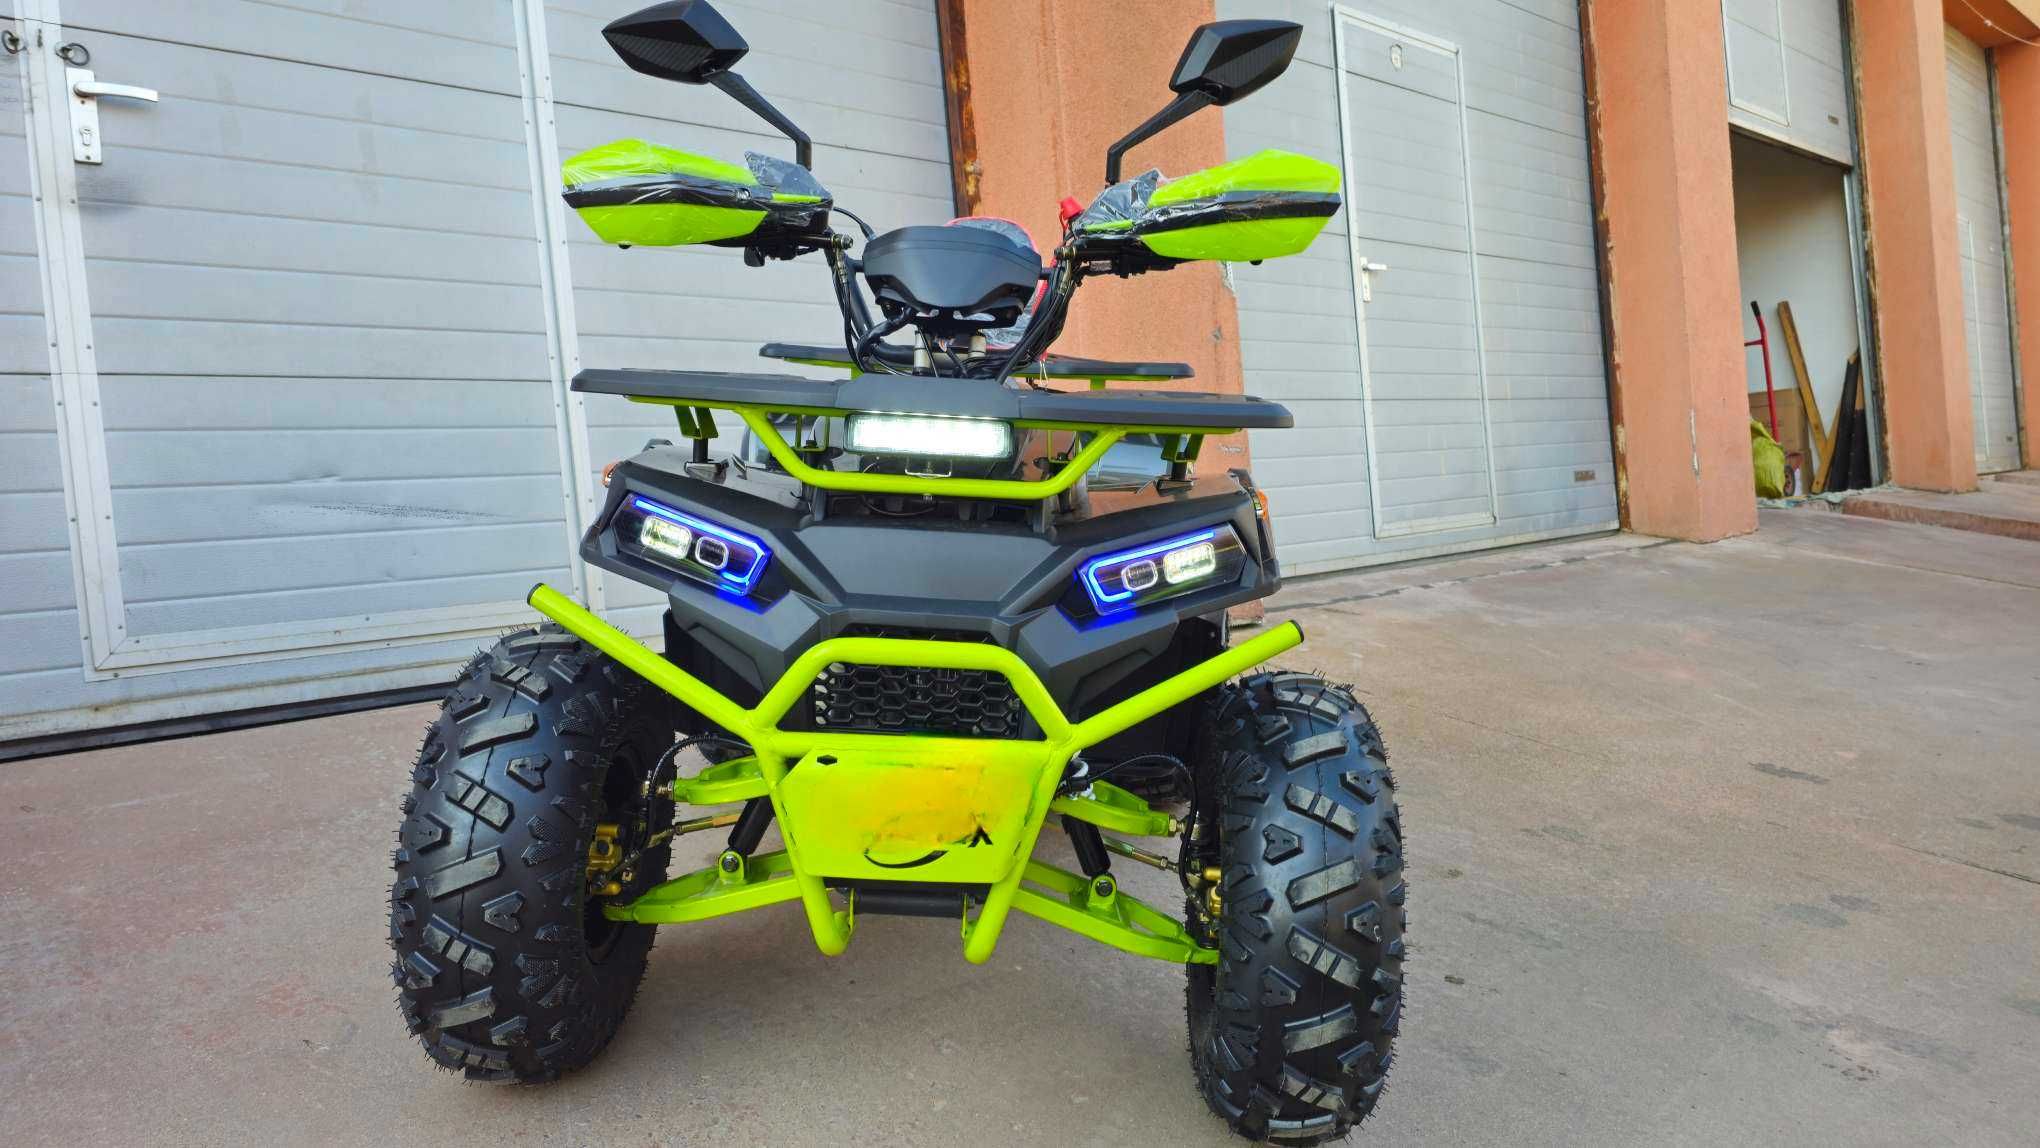 АТВ-ATV 150cc нов модел автоматик с лед фарове